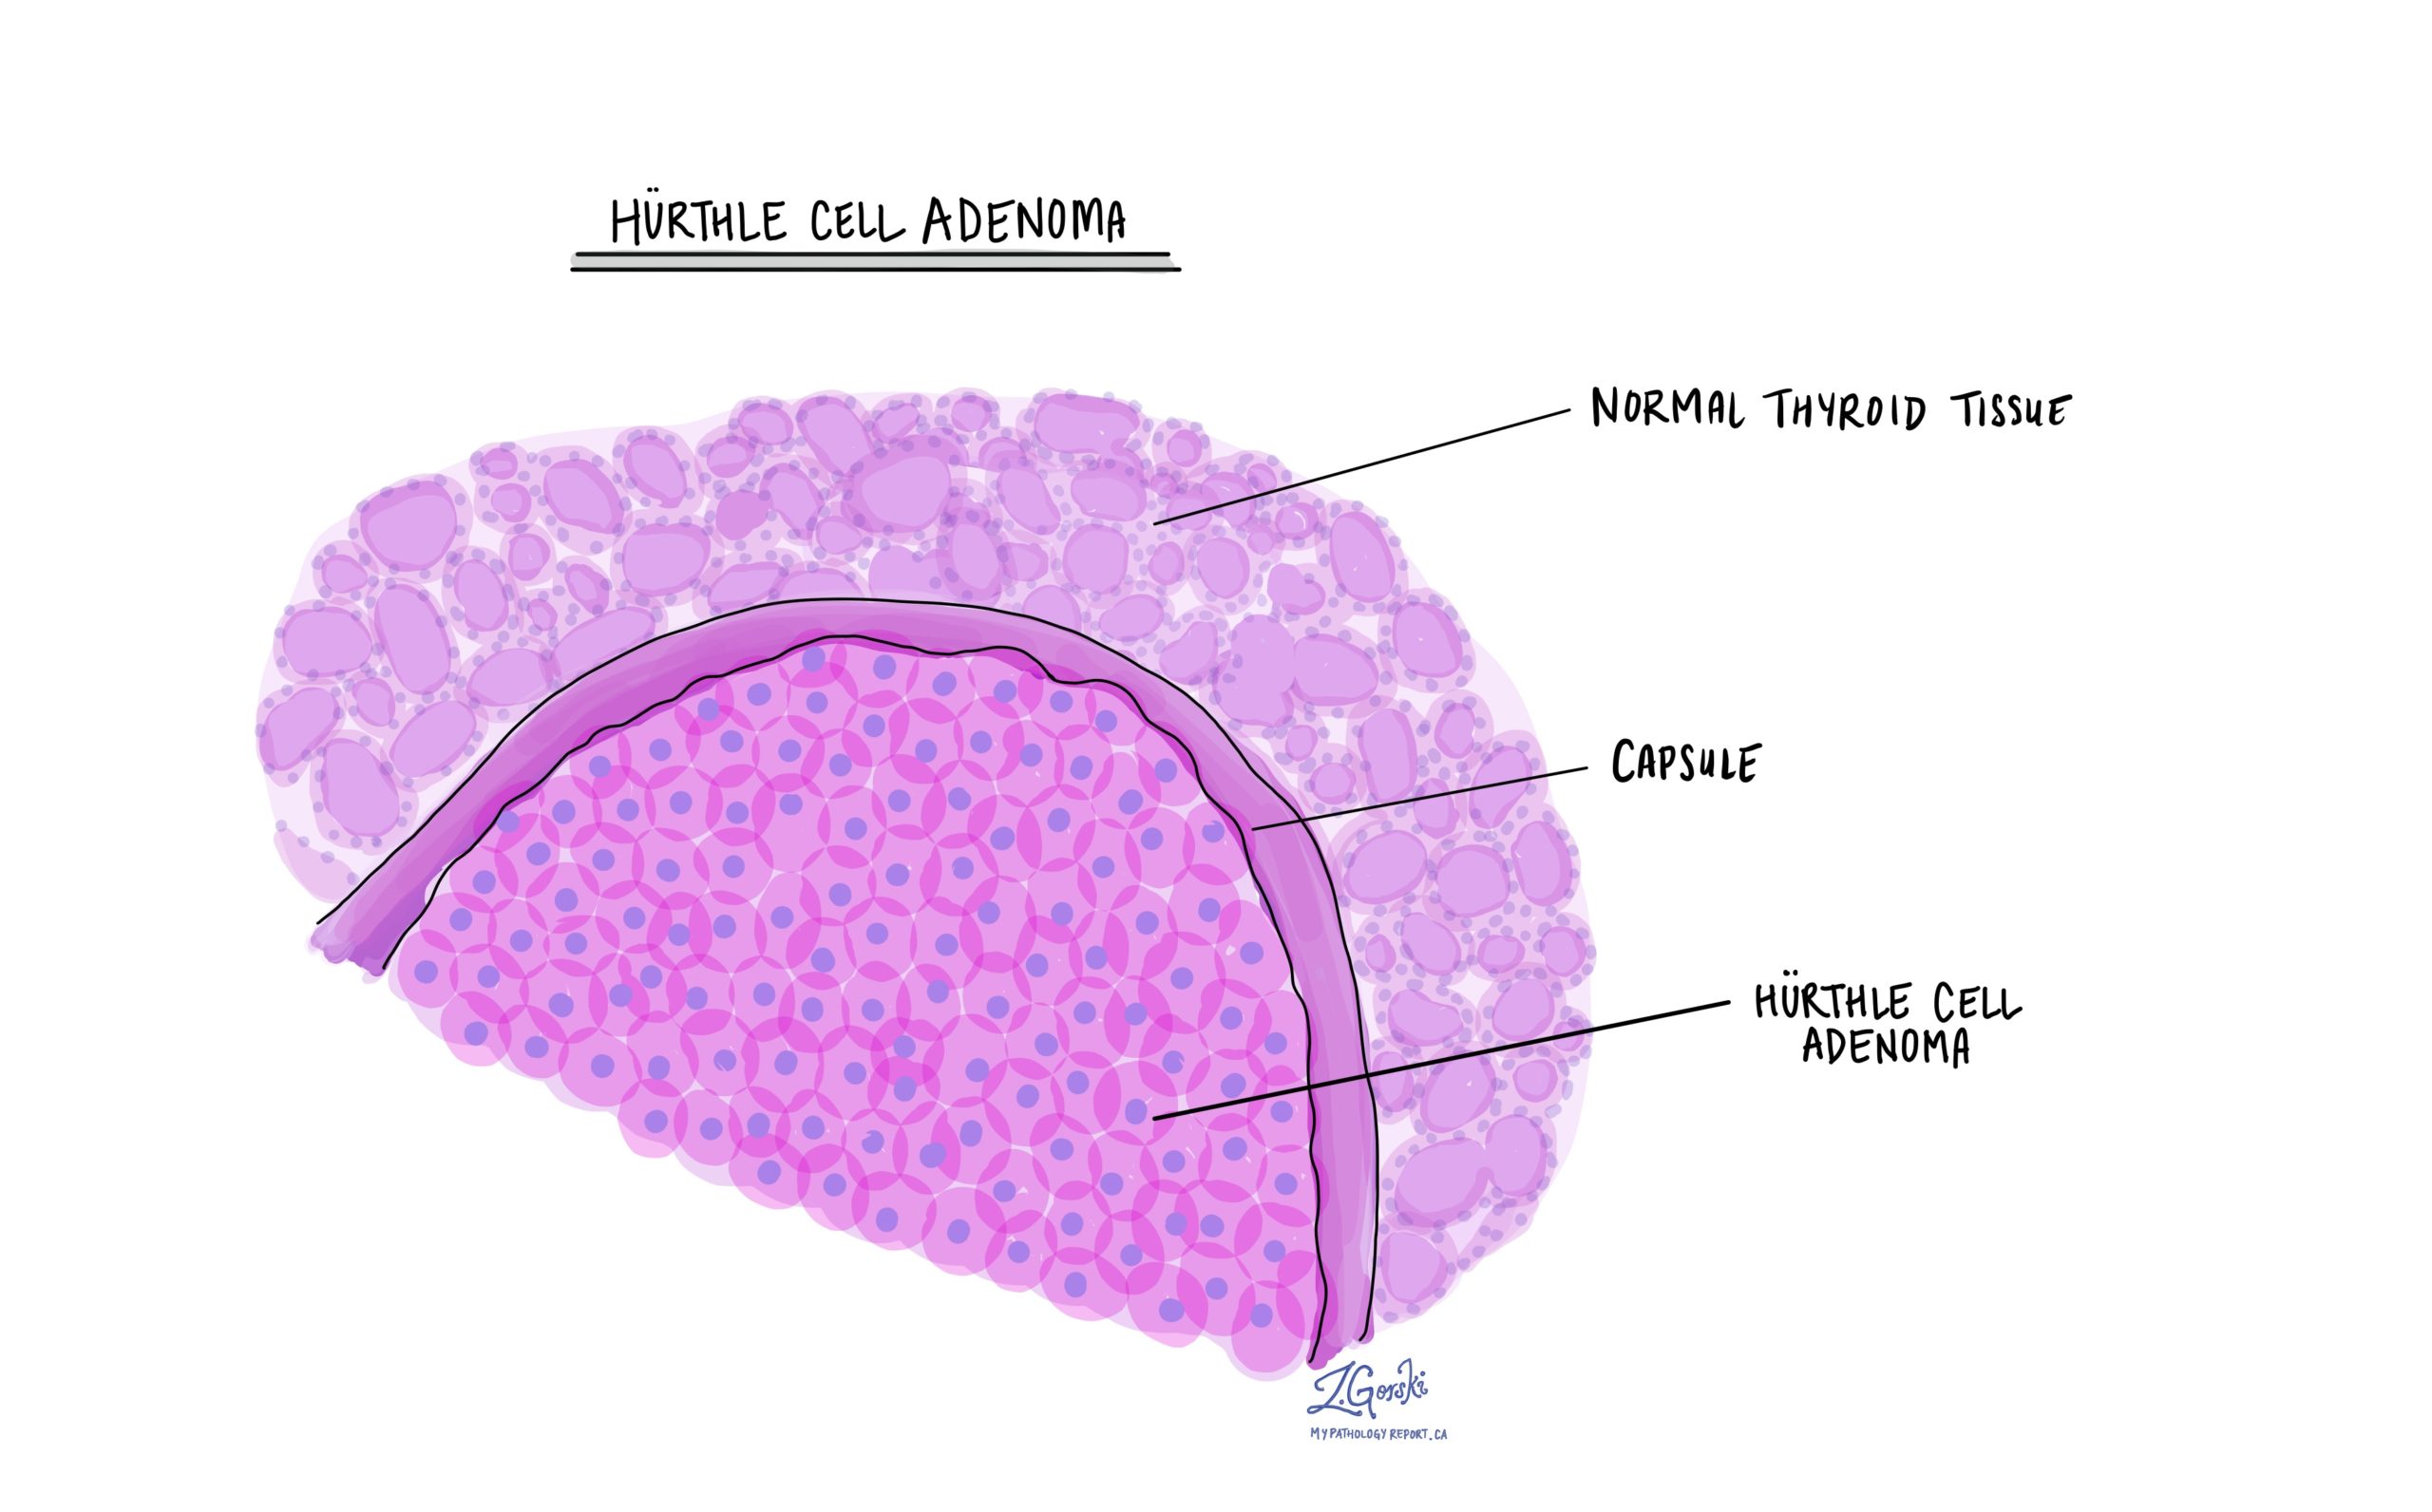 Hurthle cell adenoma | MyPathologyReport.ca